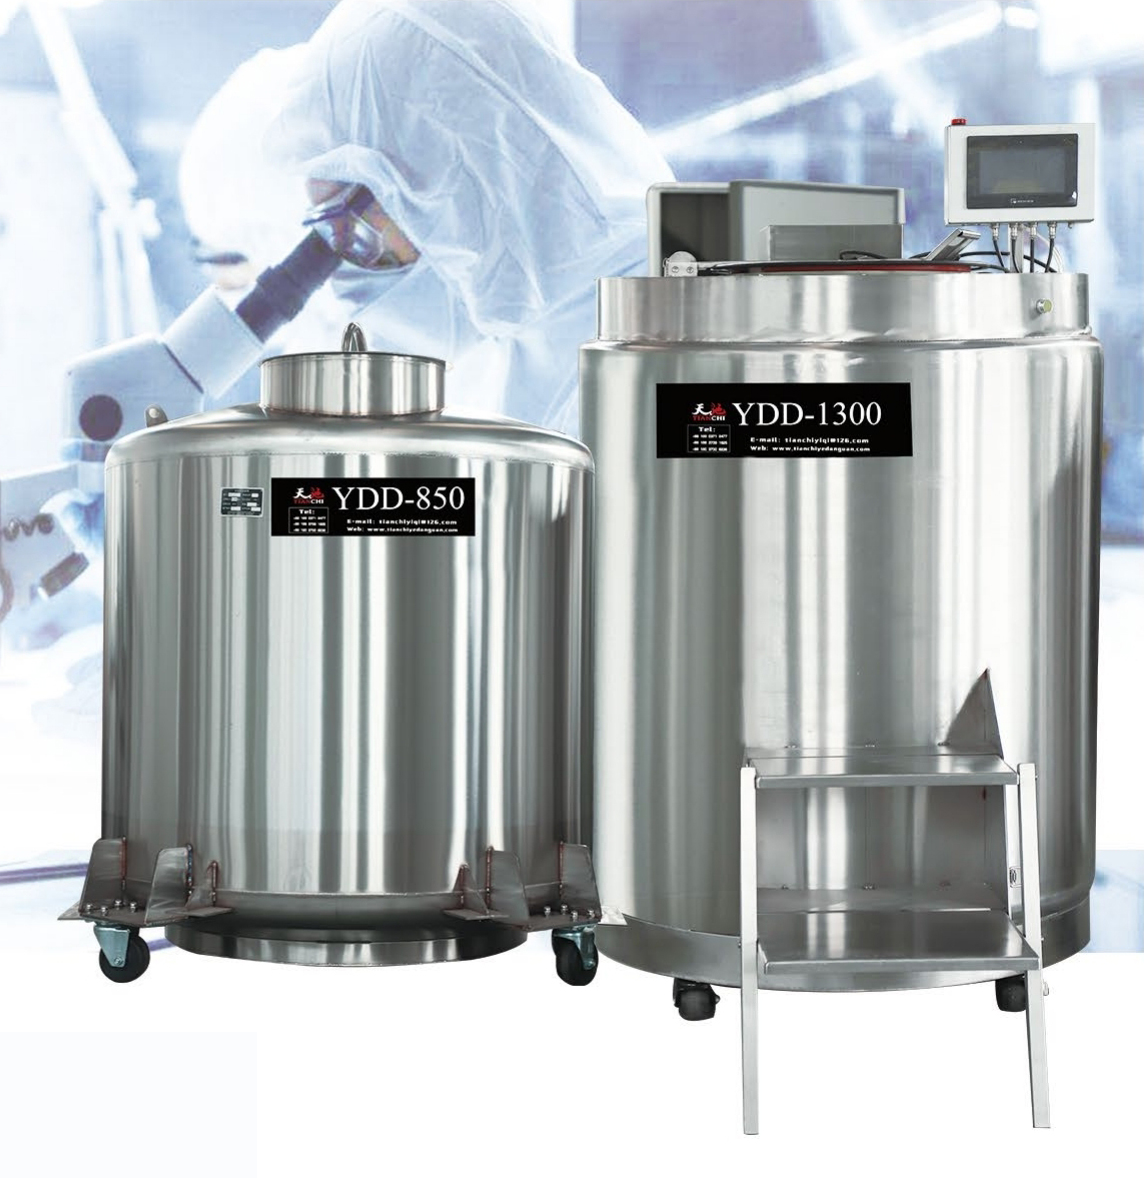 YDD series stem cell liquid nitrogen tank 850L liquid nitrogen container manufacturer KGSQ